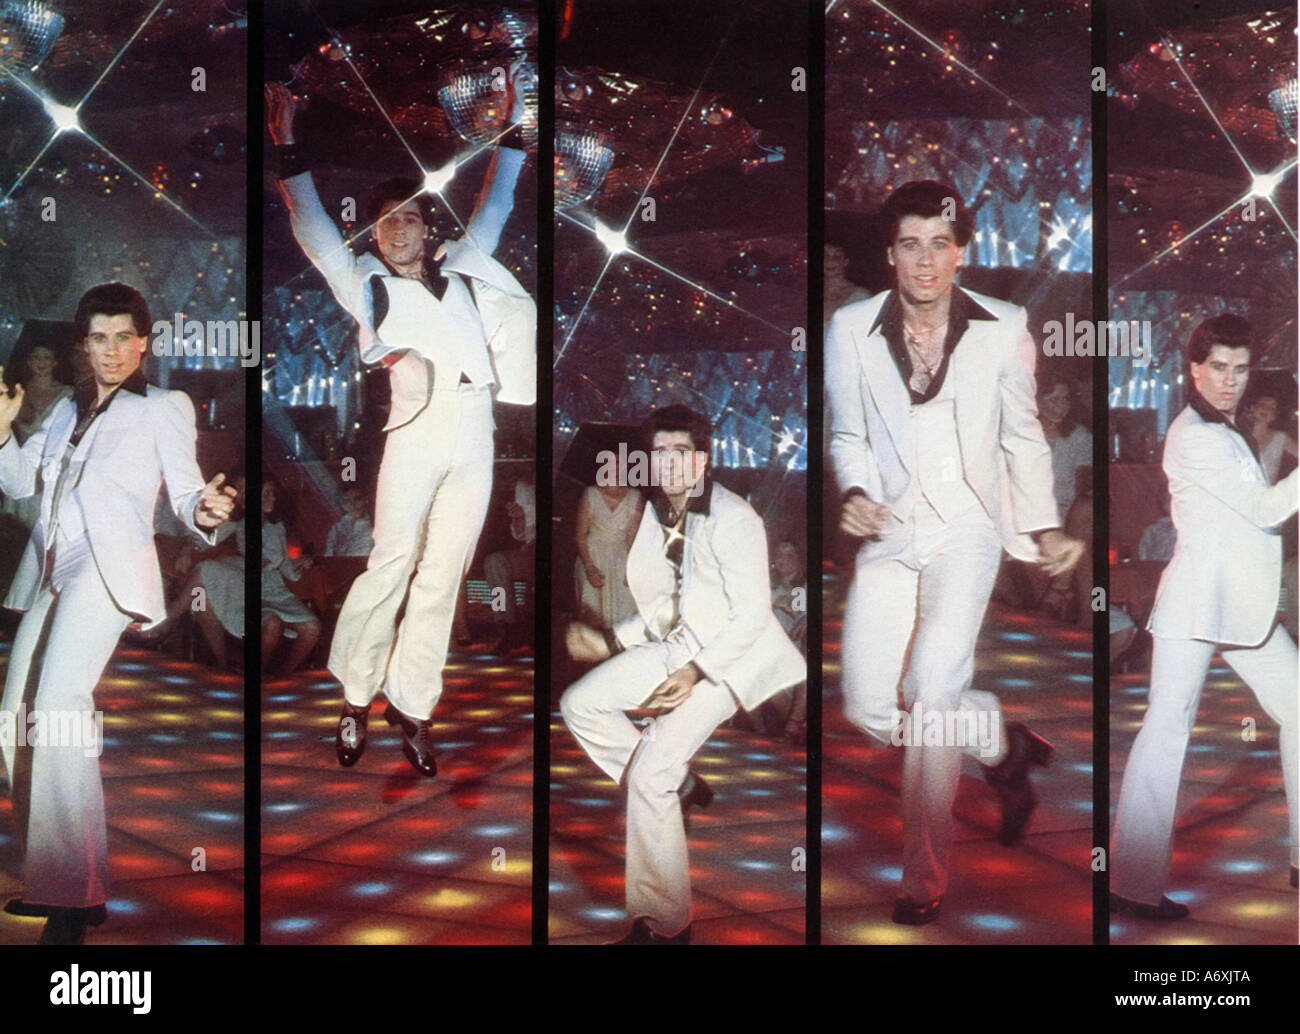 John Travolta shows off his disco moves at Miami club LIV